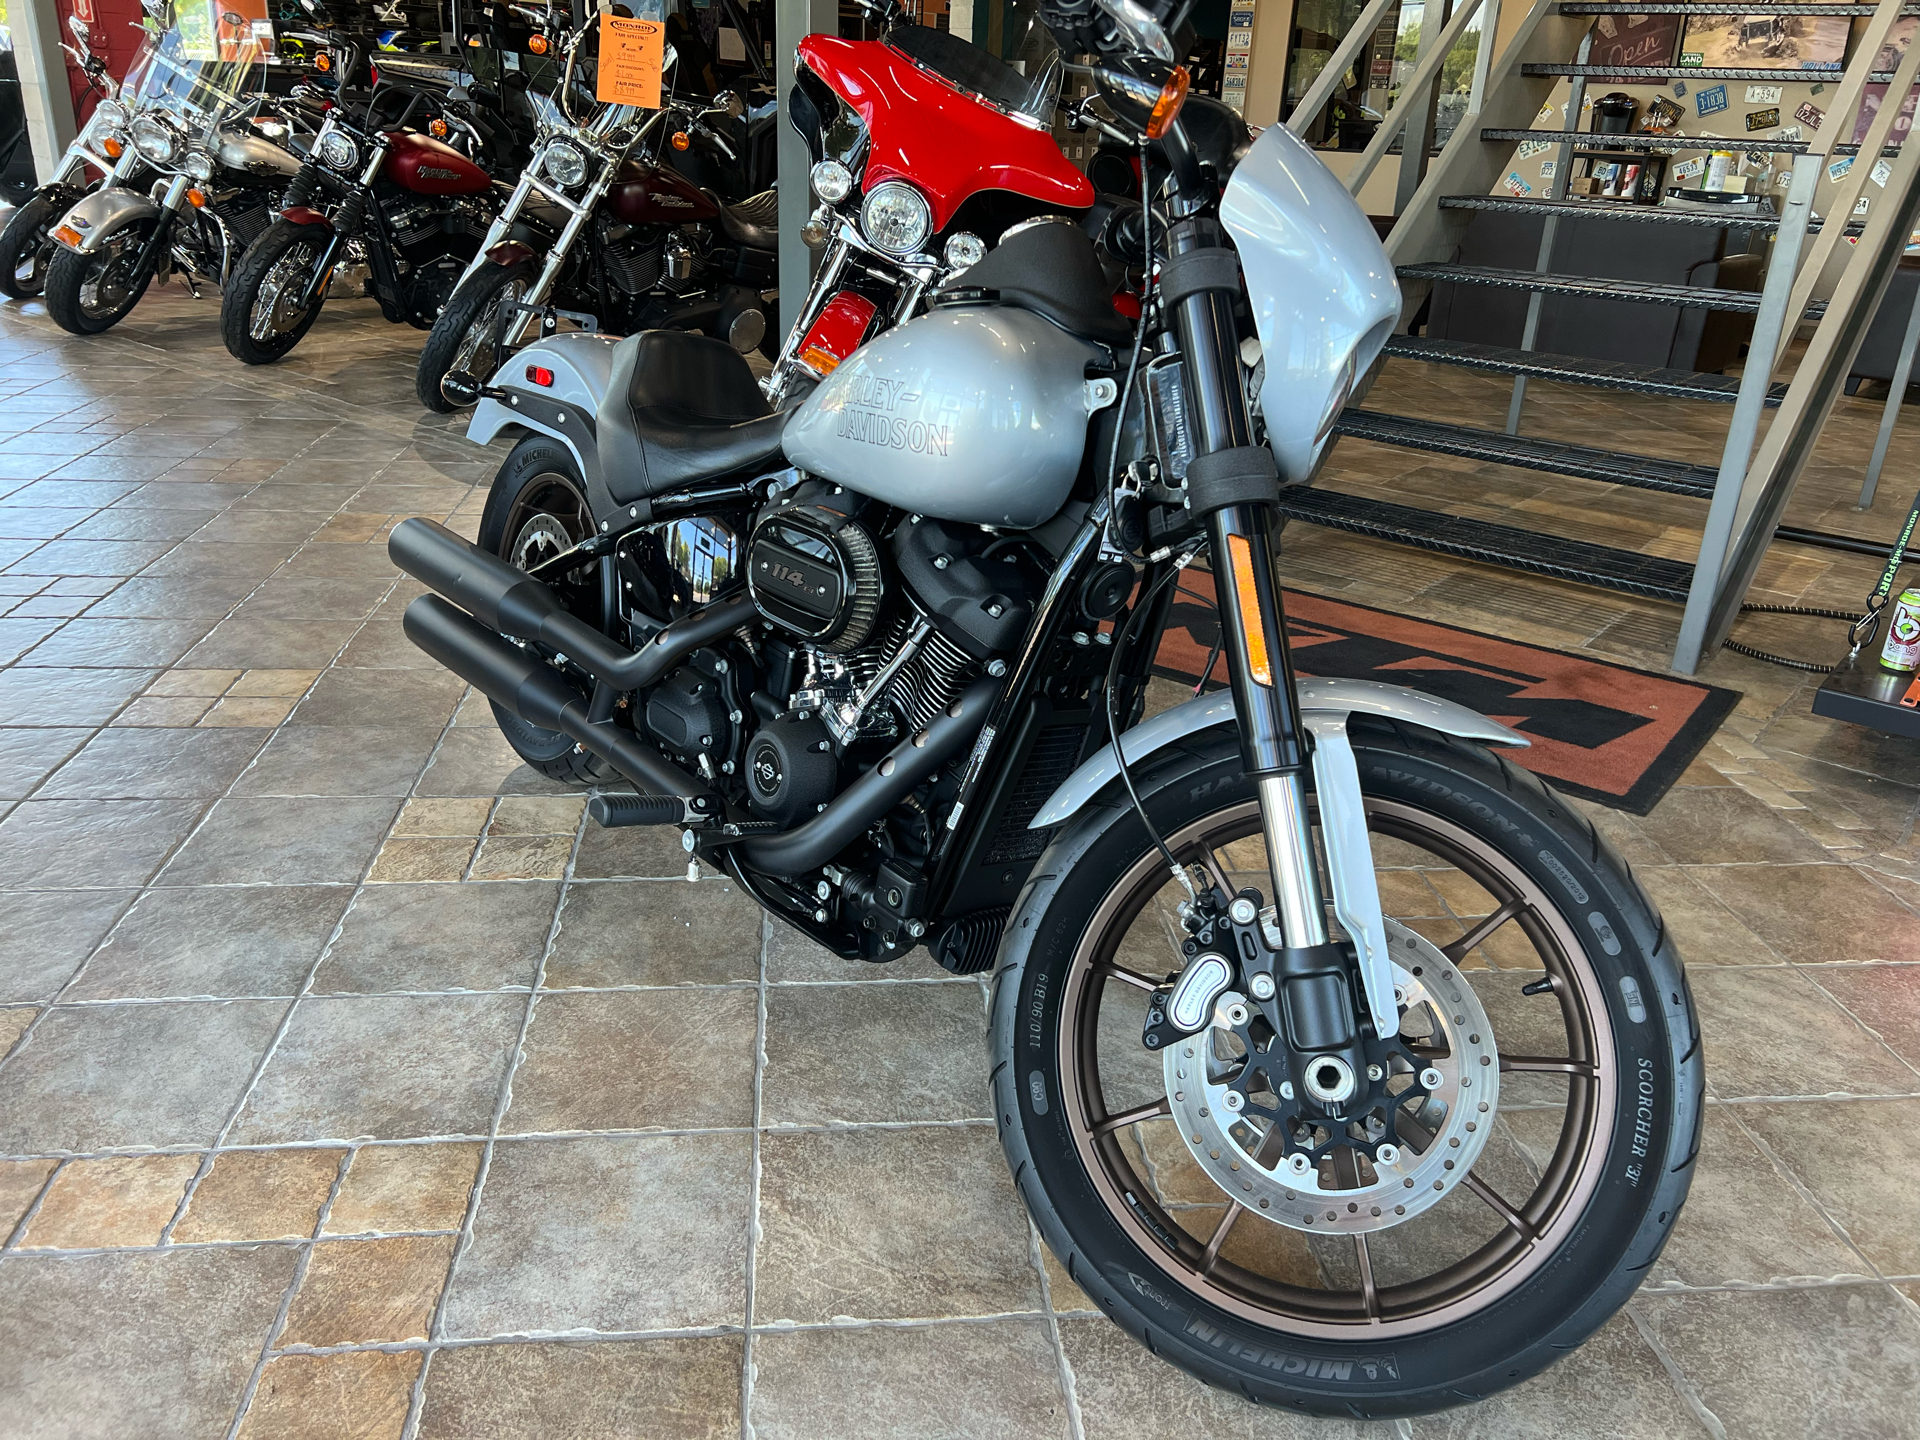 2020 Harley-Davidson Low Rider®S in Monroe, Michigan - Photo 2